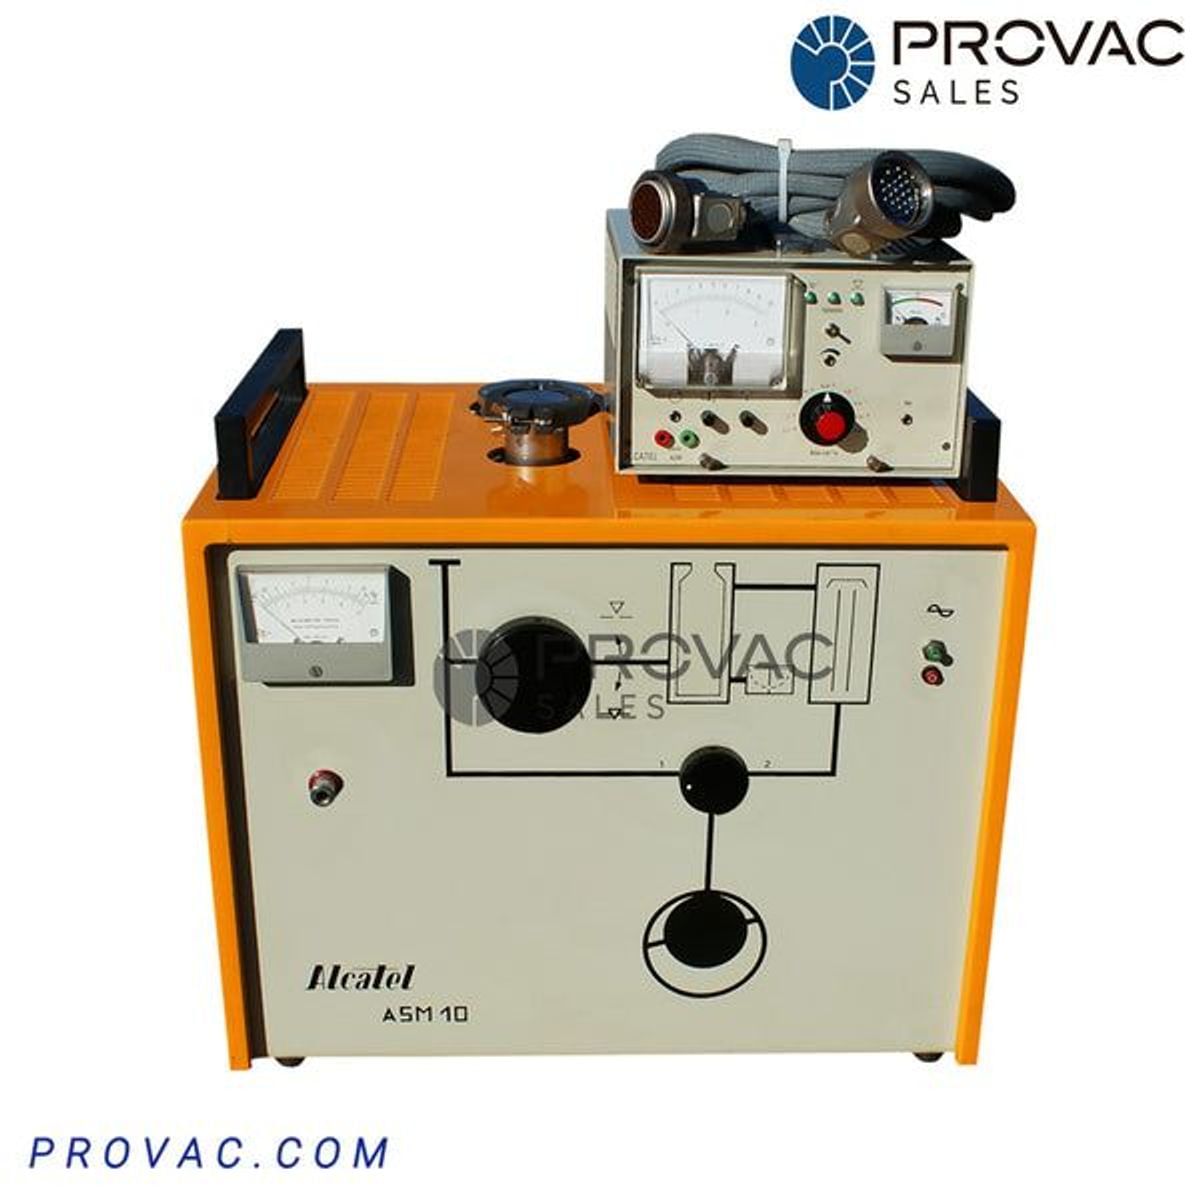 Alcatel ASM-10 Portable Helium Leak Detector, Rebuilt Image 1